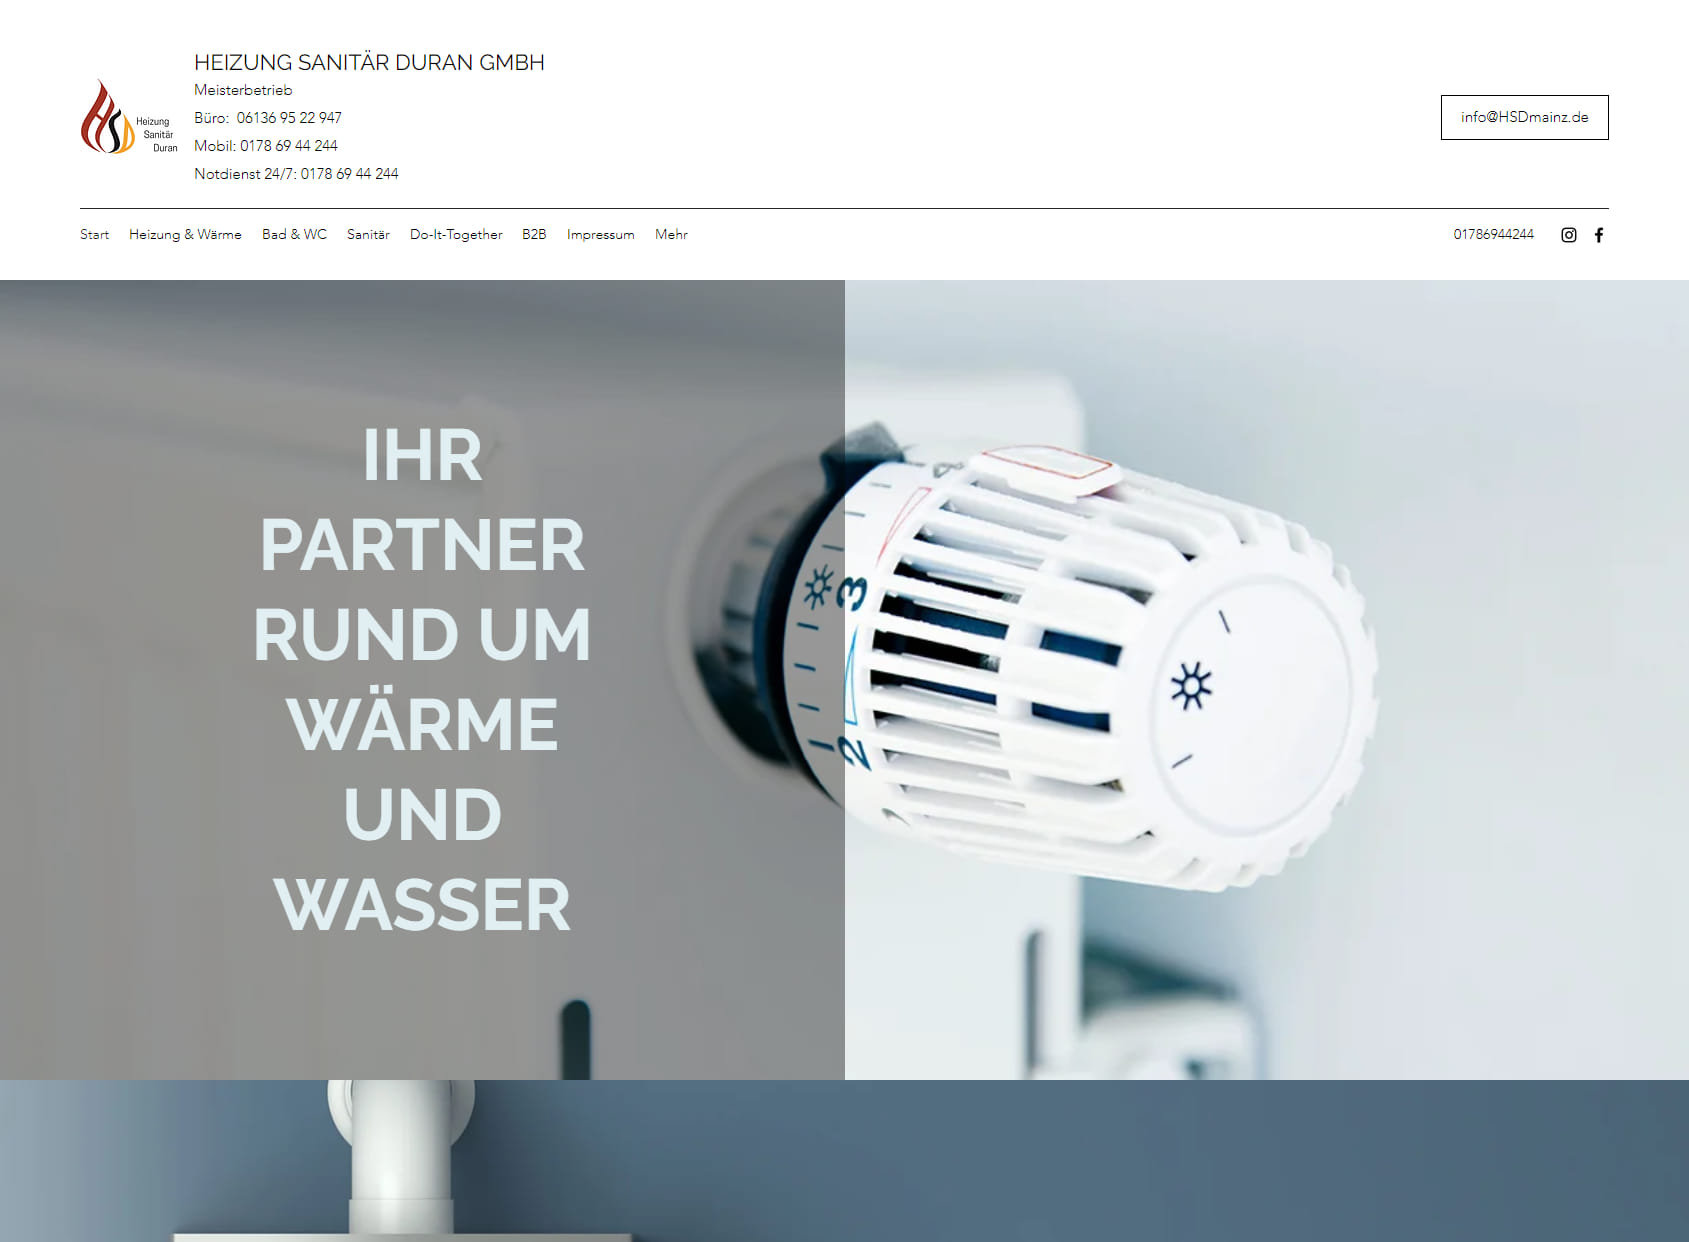 Heizung Sanitär Duran GmbH